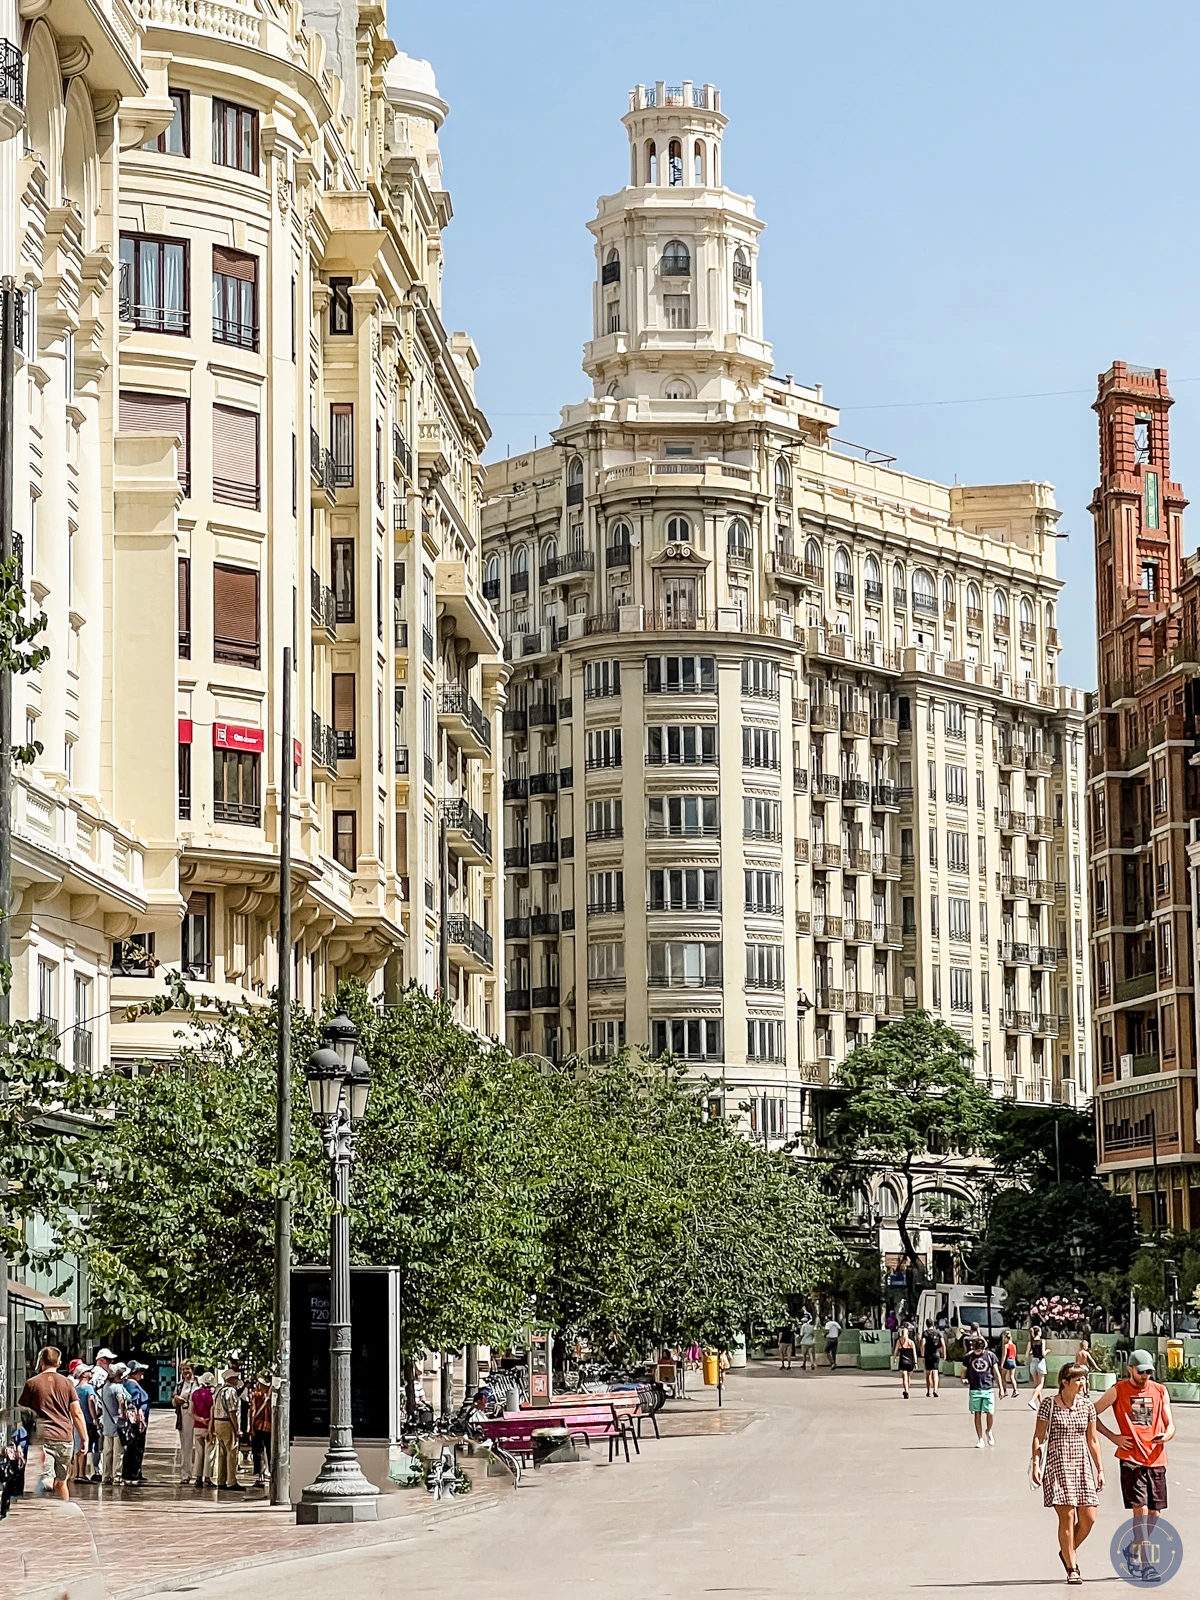 city building street in valencia spain